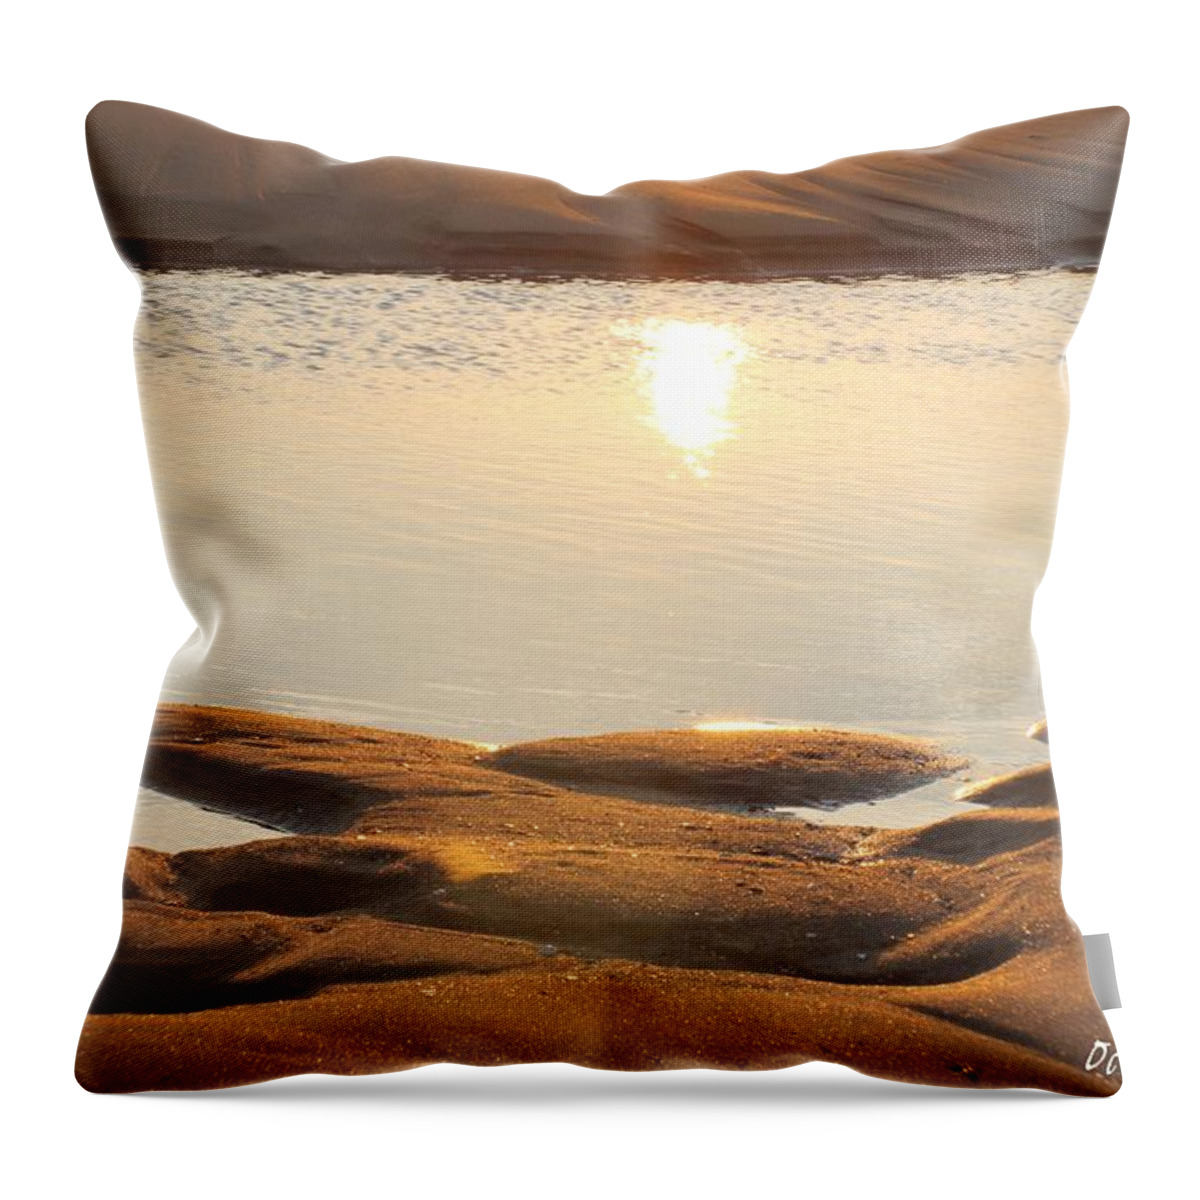 Sun Reflection Throw Pillow featuring the photograph Sand Shine by Robert Banach